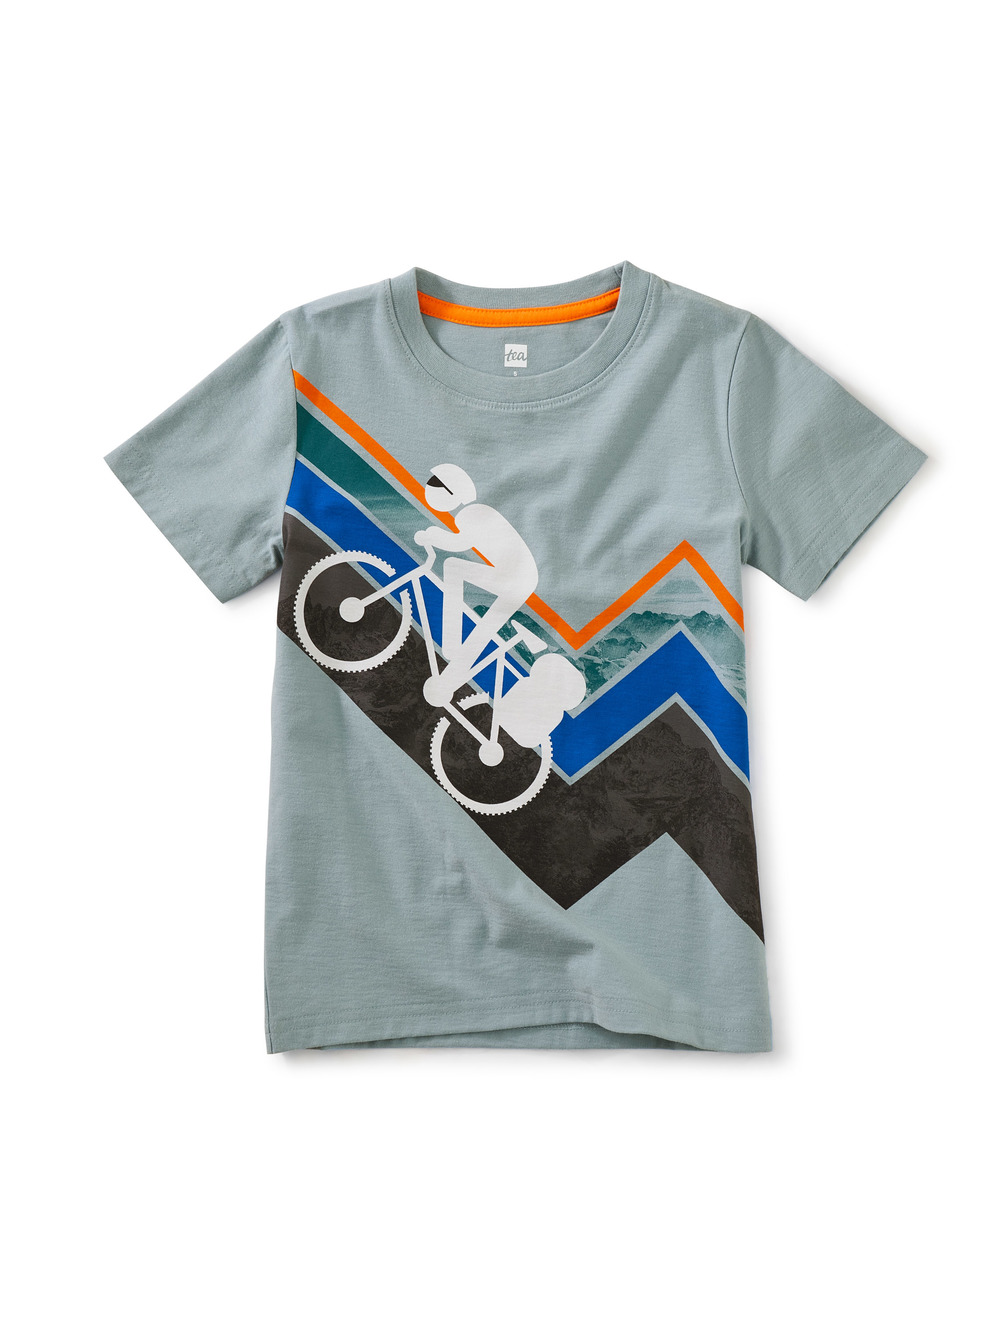 Mountain Biker Graphic Tee | Tea Collection